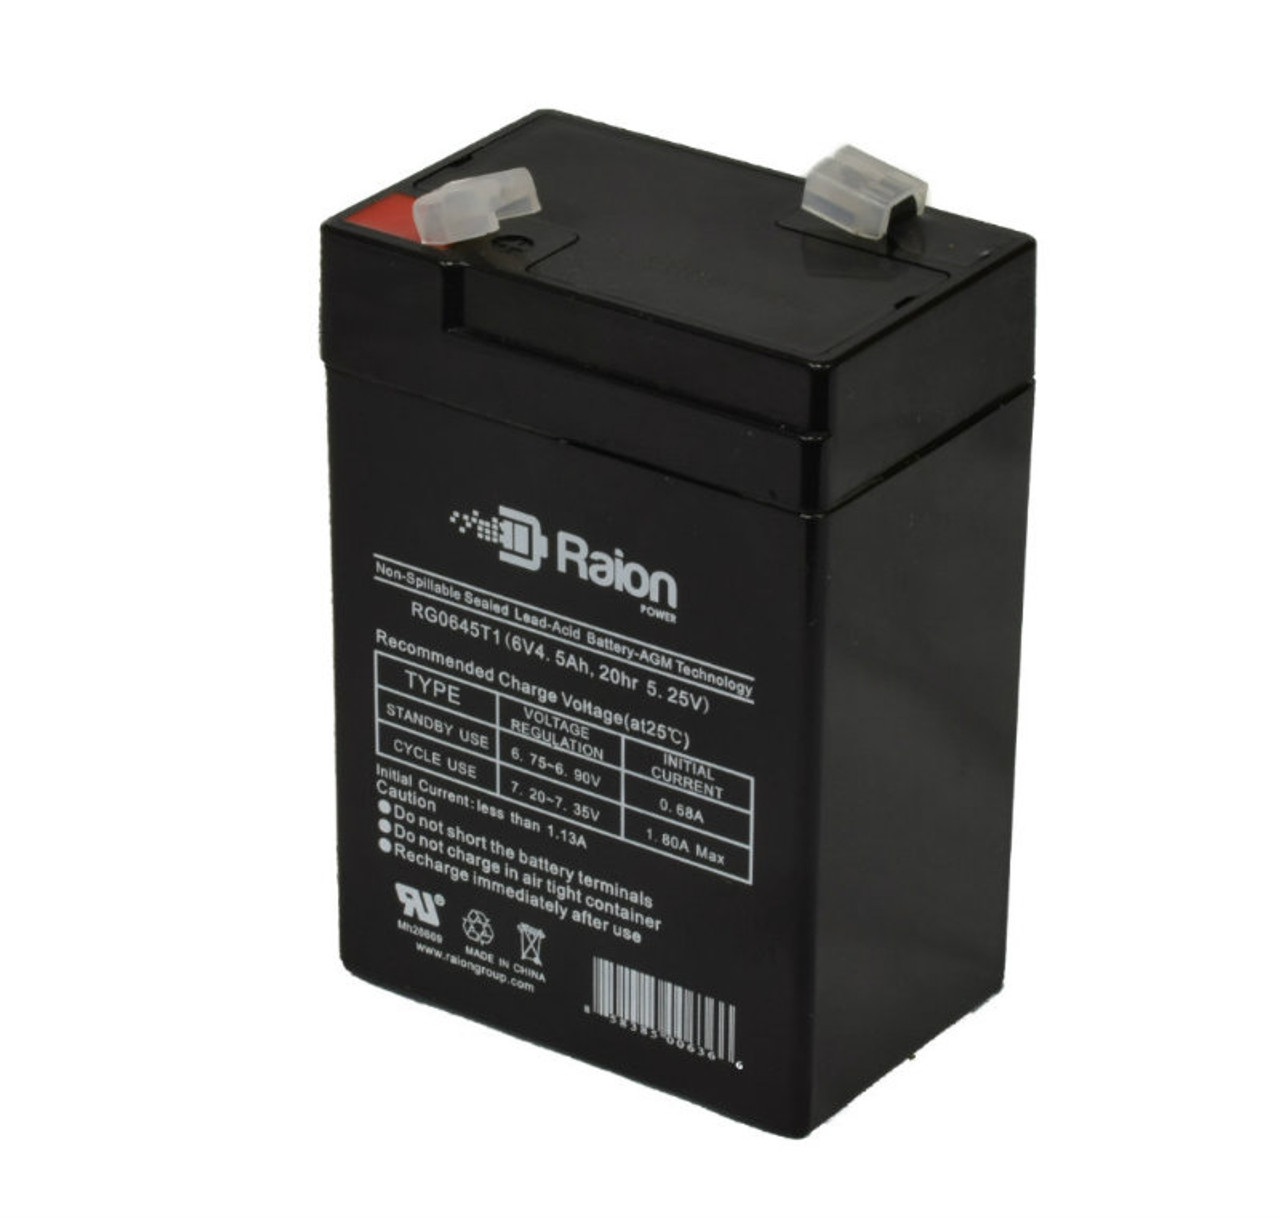 Raion Power RG0645T1 6V 4.5Ah Replacement Battery Cartridge for Light Alarms 5E15BK